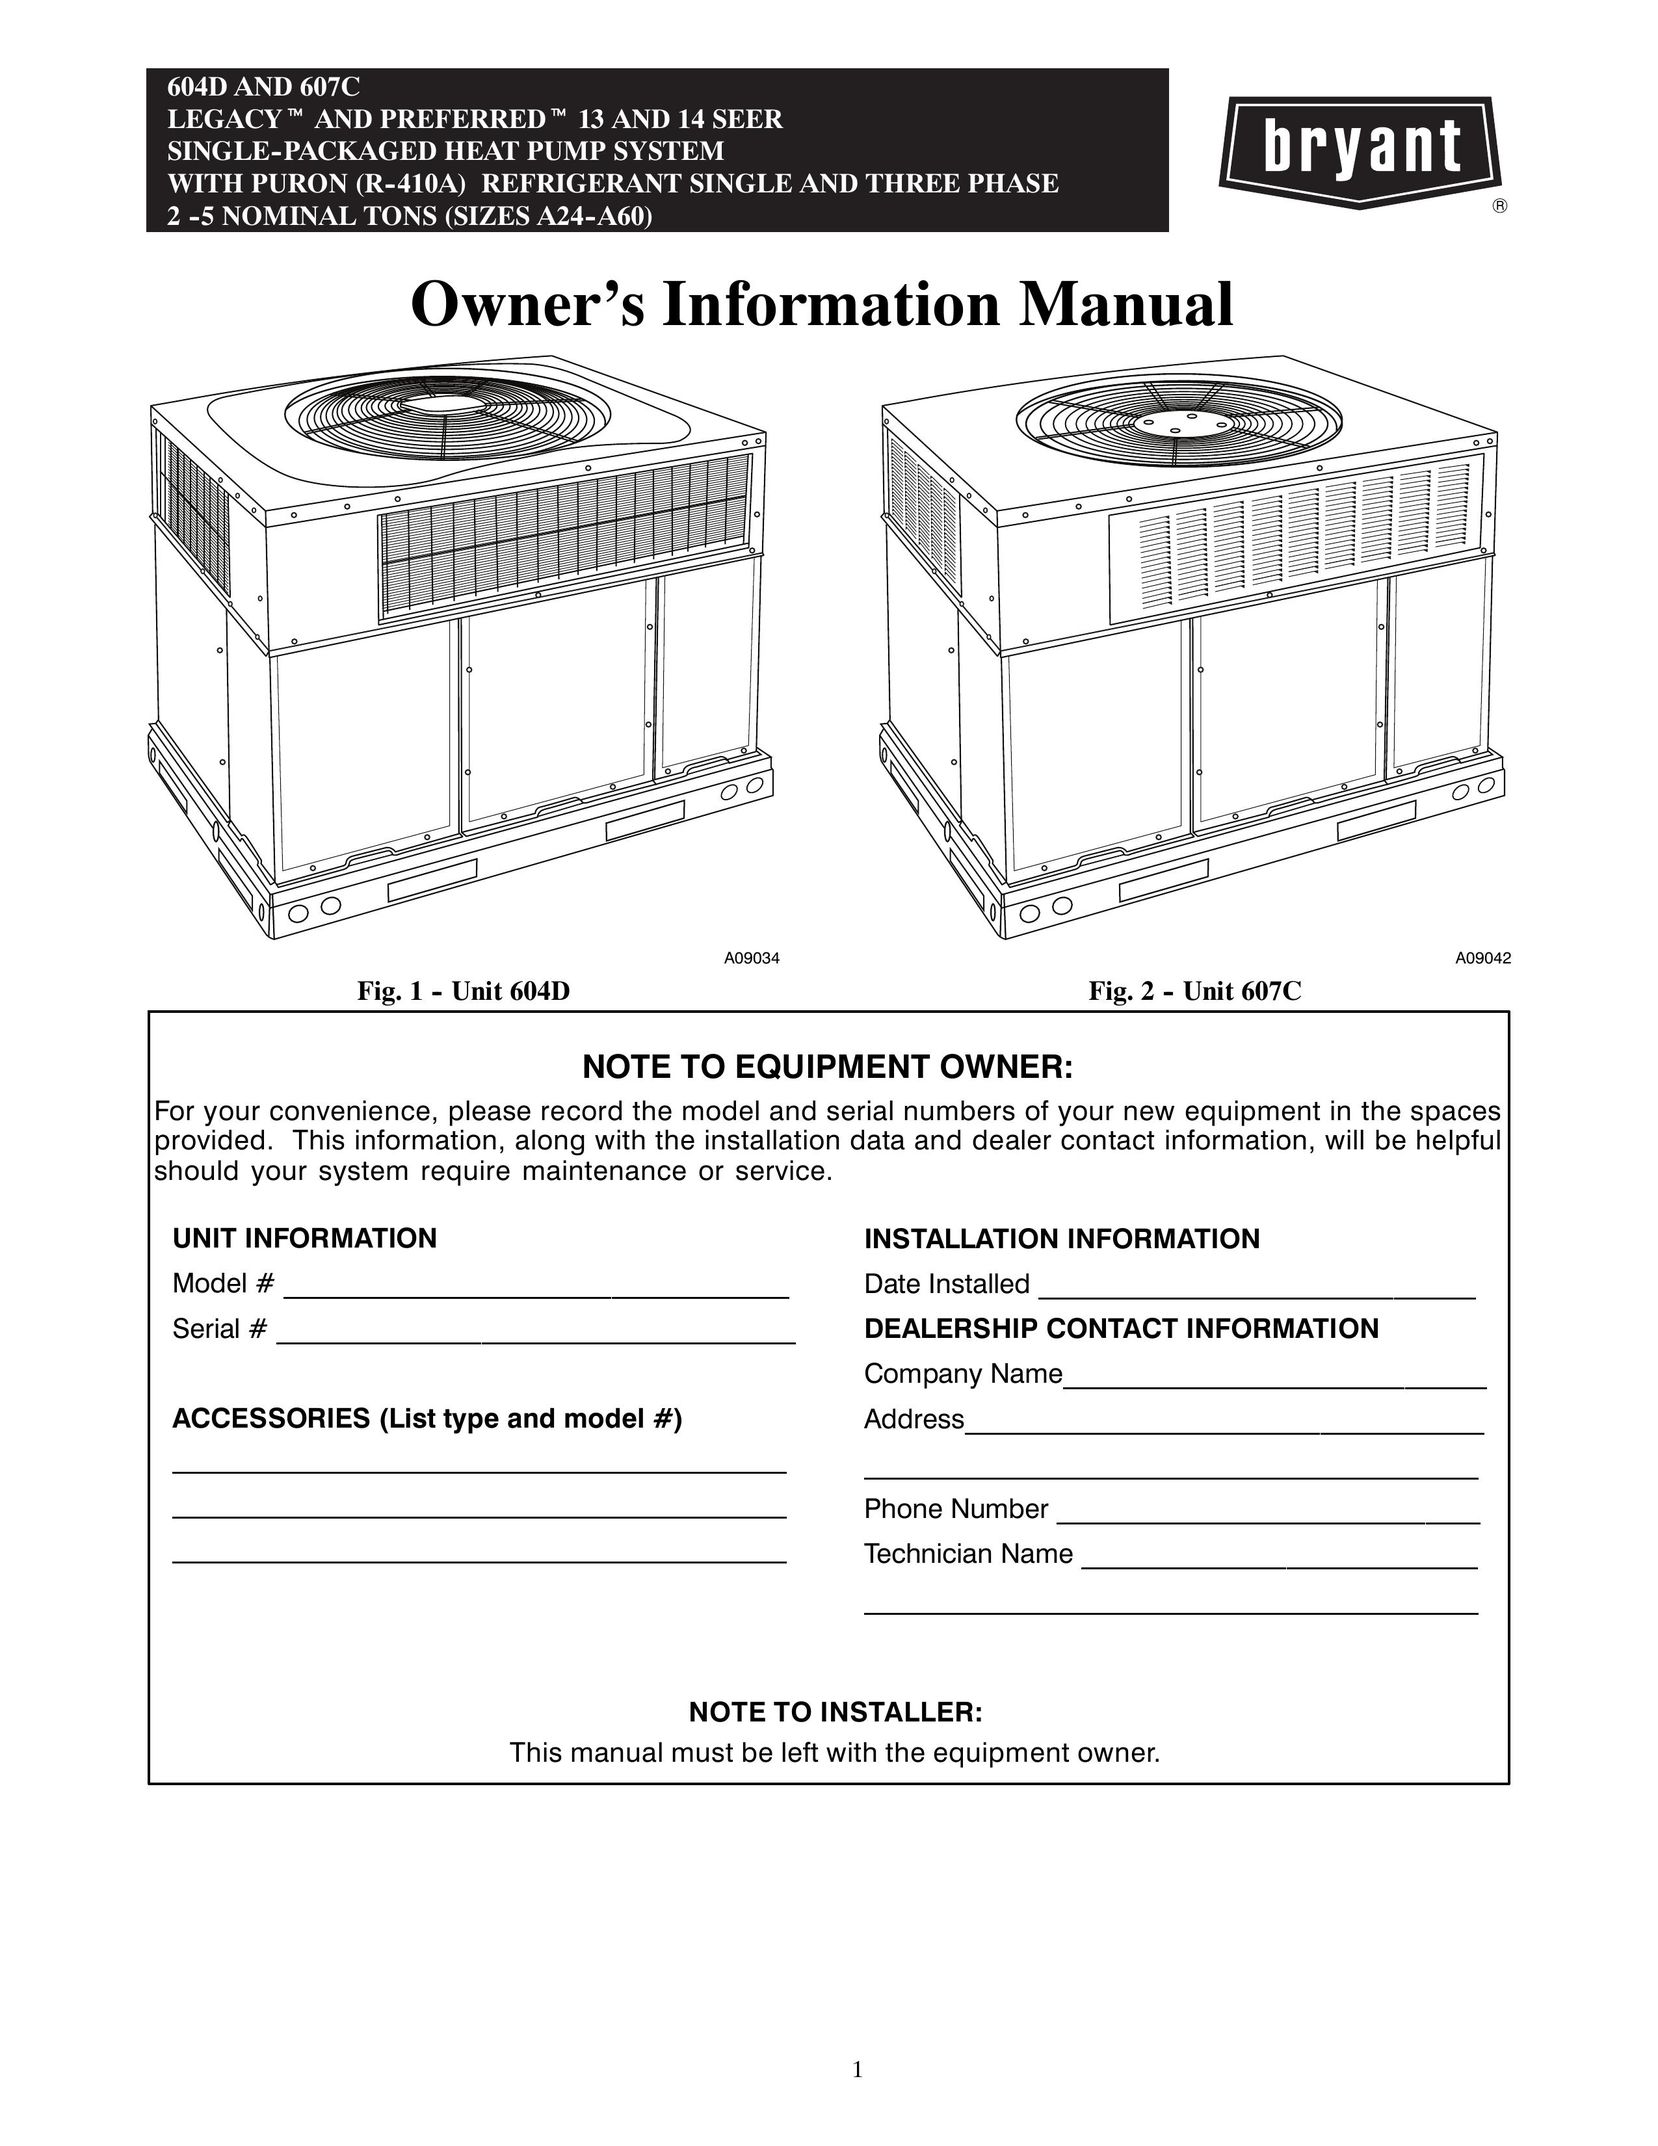 Bryant 604D Heat Pump User Manual